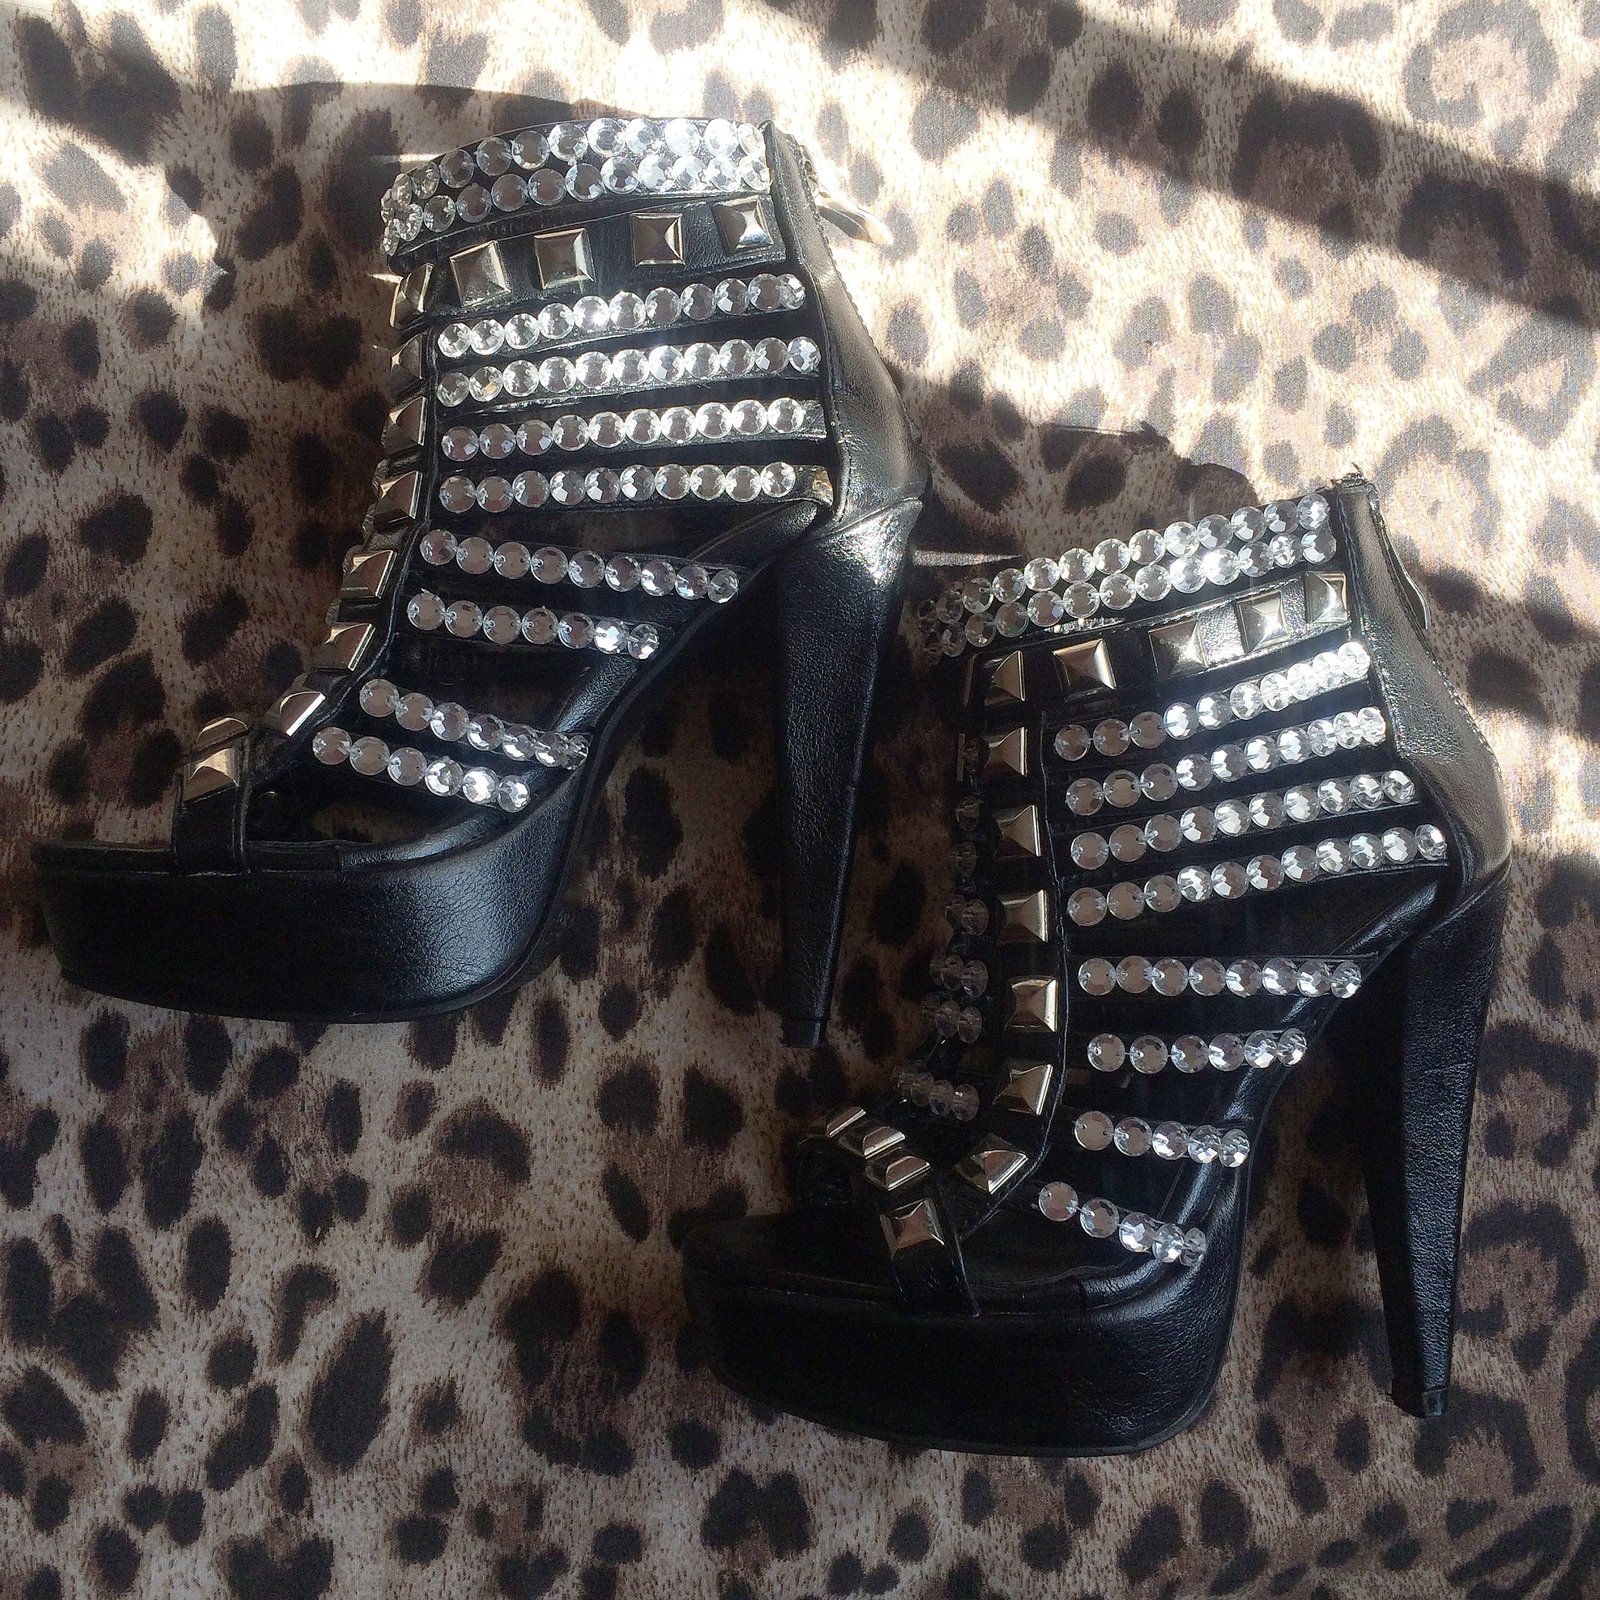 black diamante platform heels